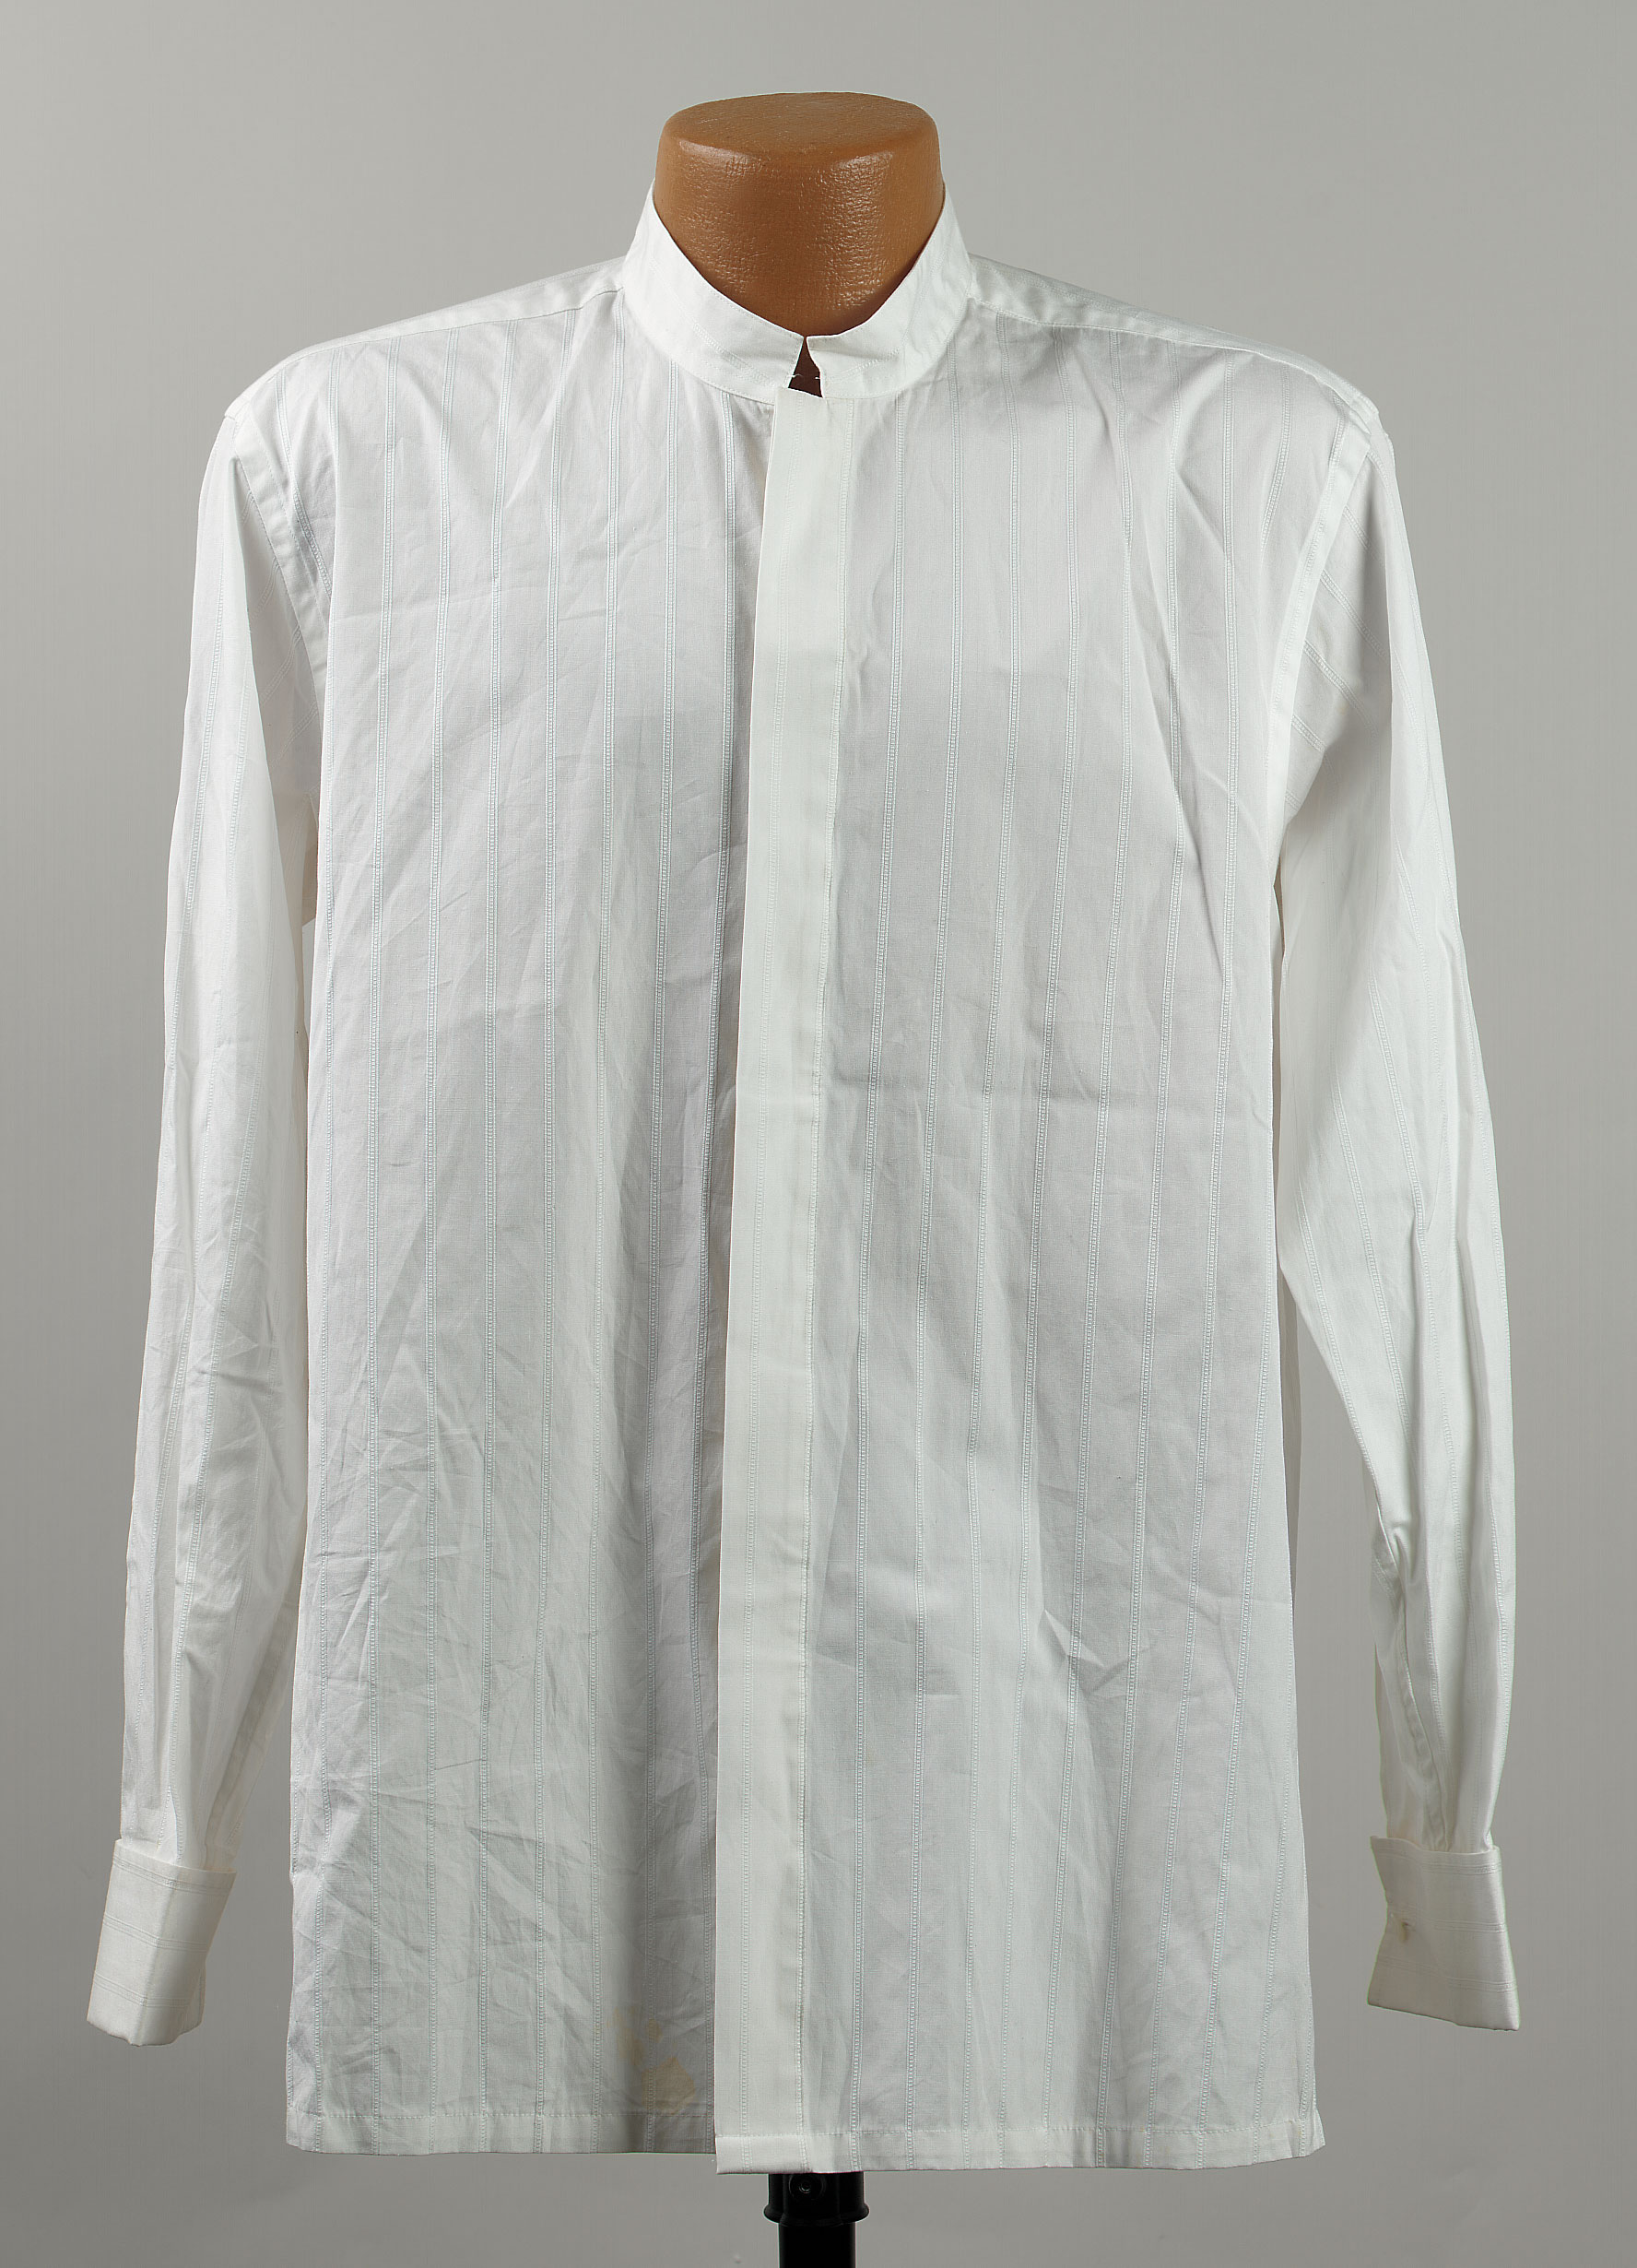 A dress shirt worn by Patti Smith (front)